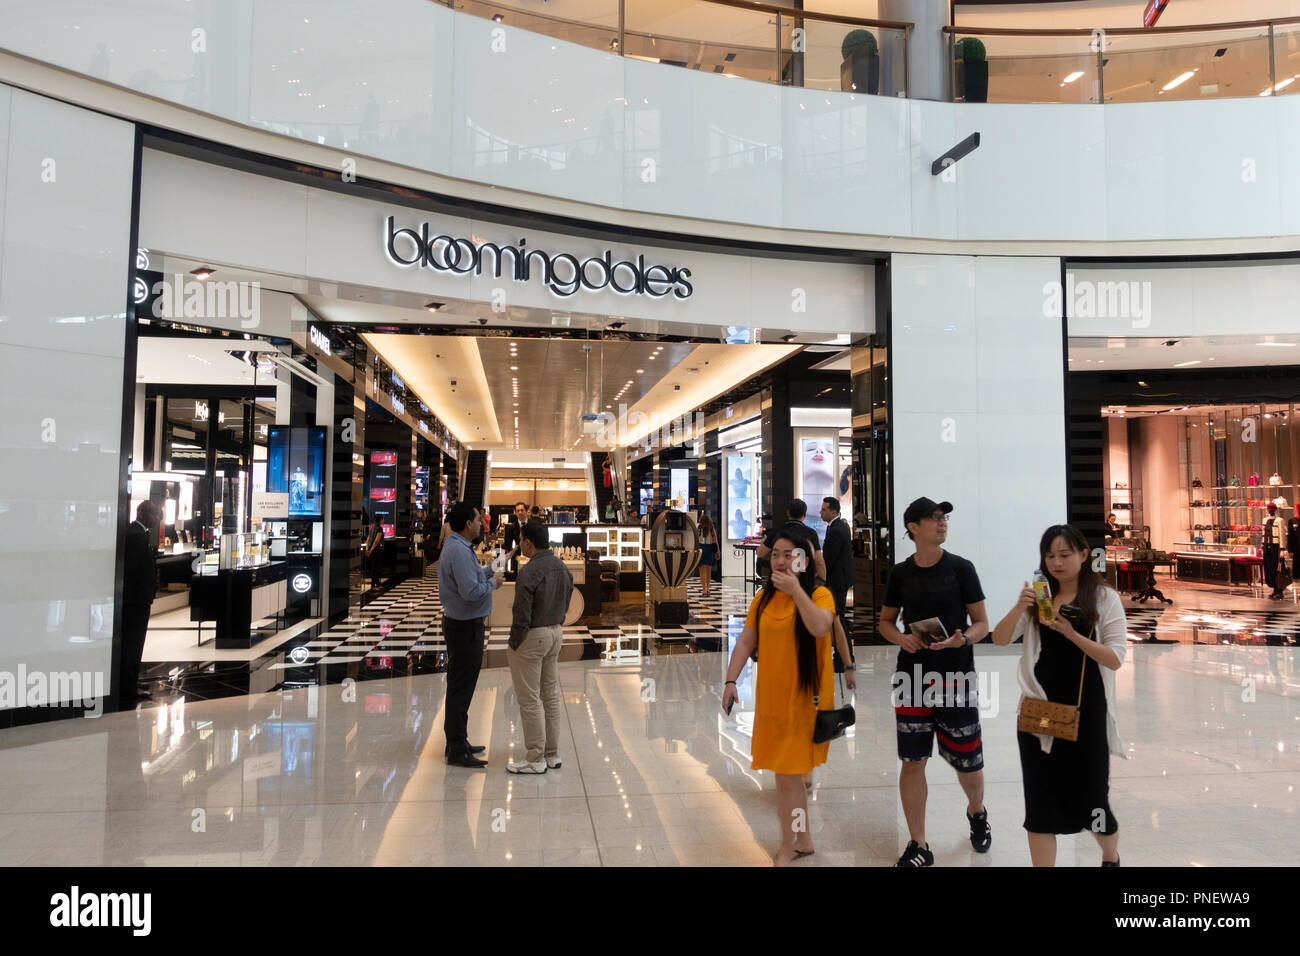 Bloomingdales department store inside Dubai Mall, UAE, United Arab Emirates  Stock Photo - Alamy